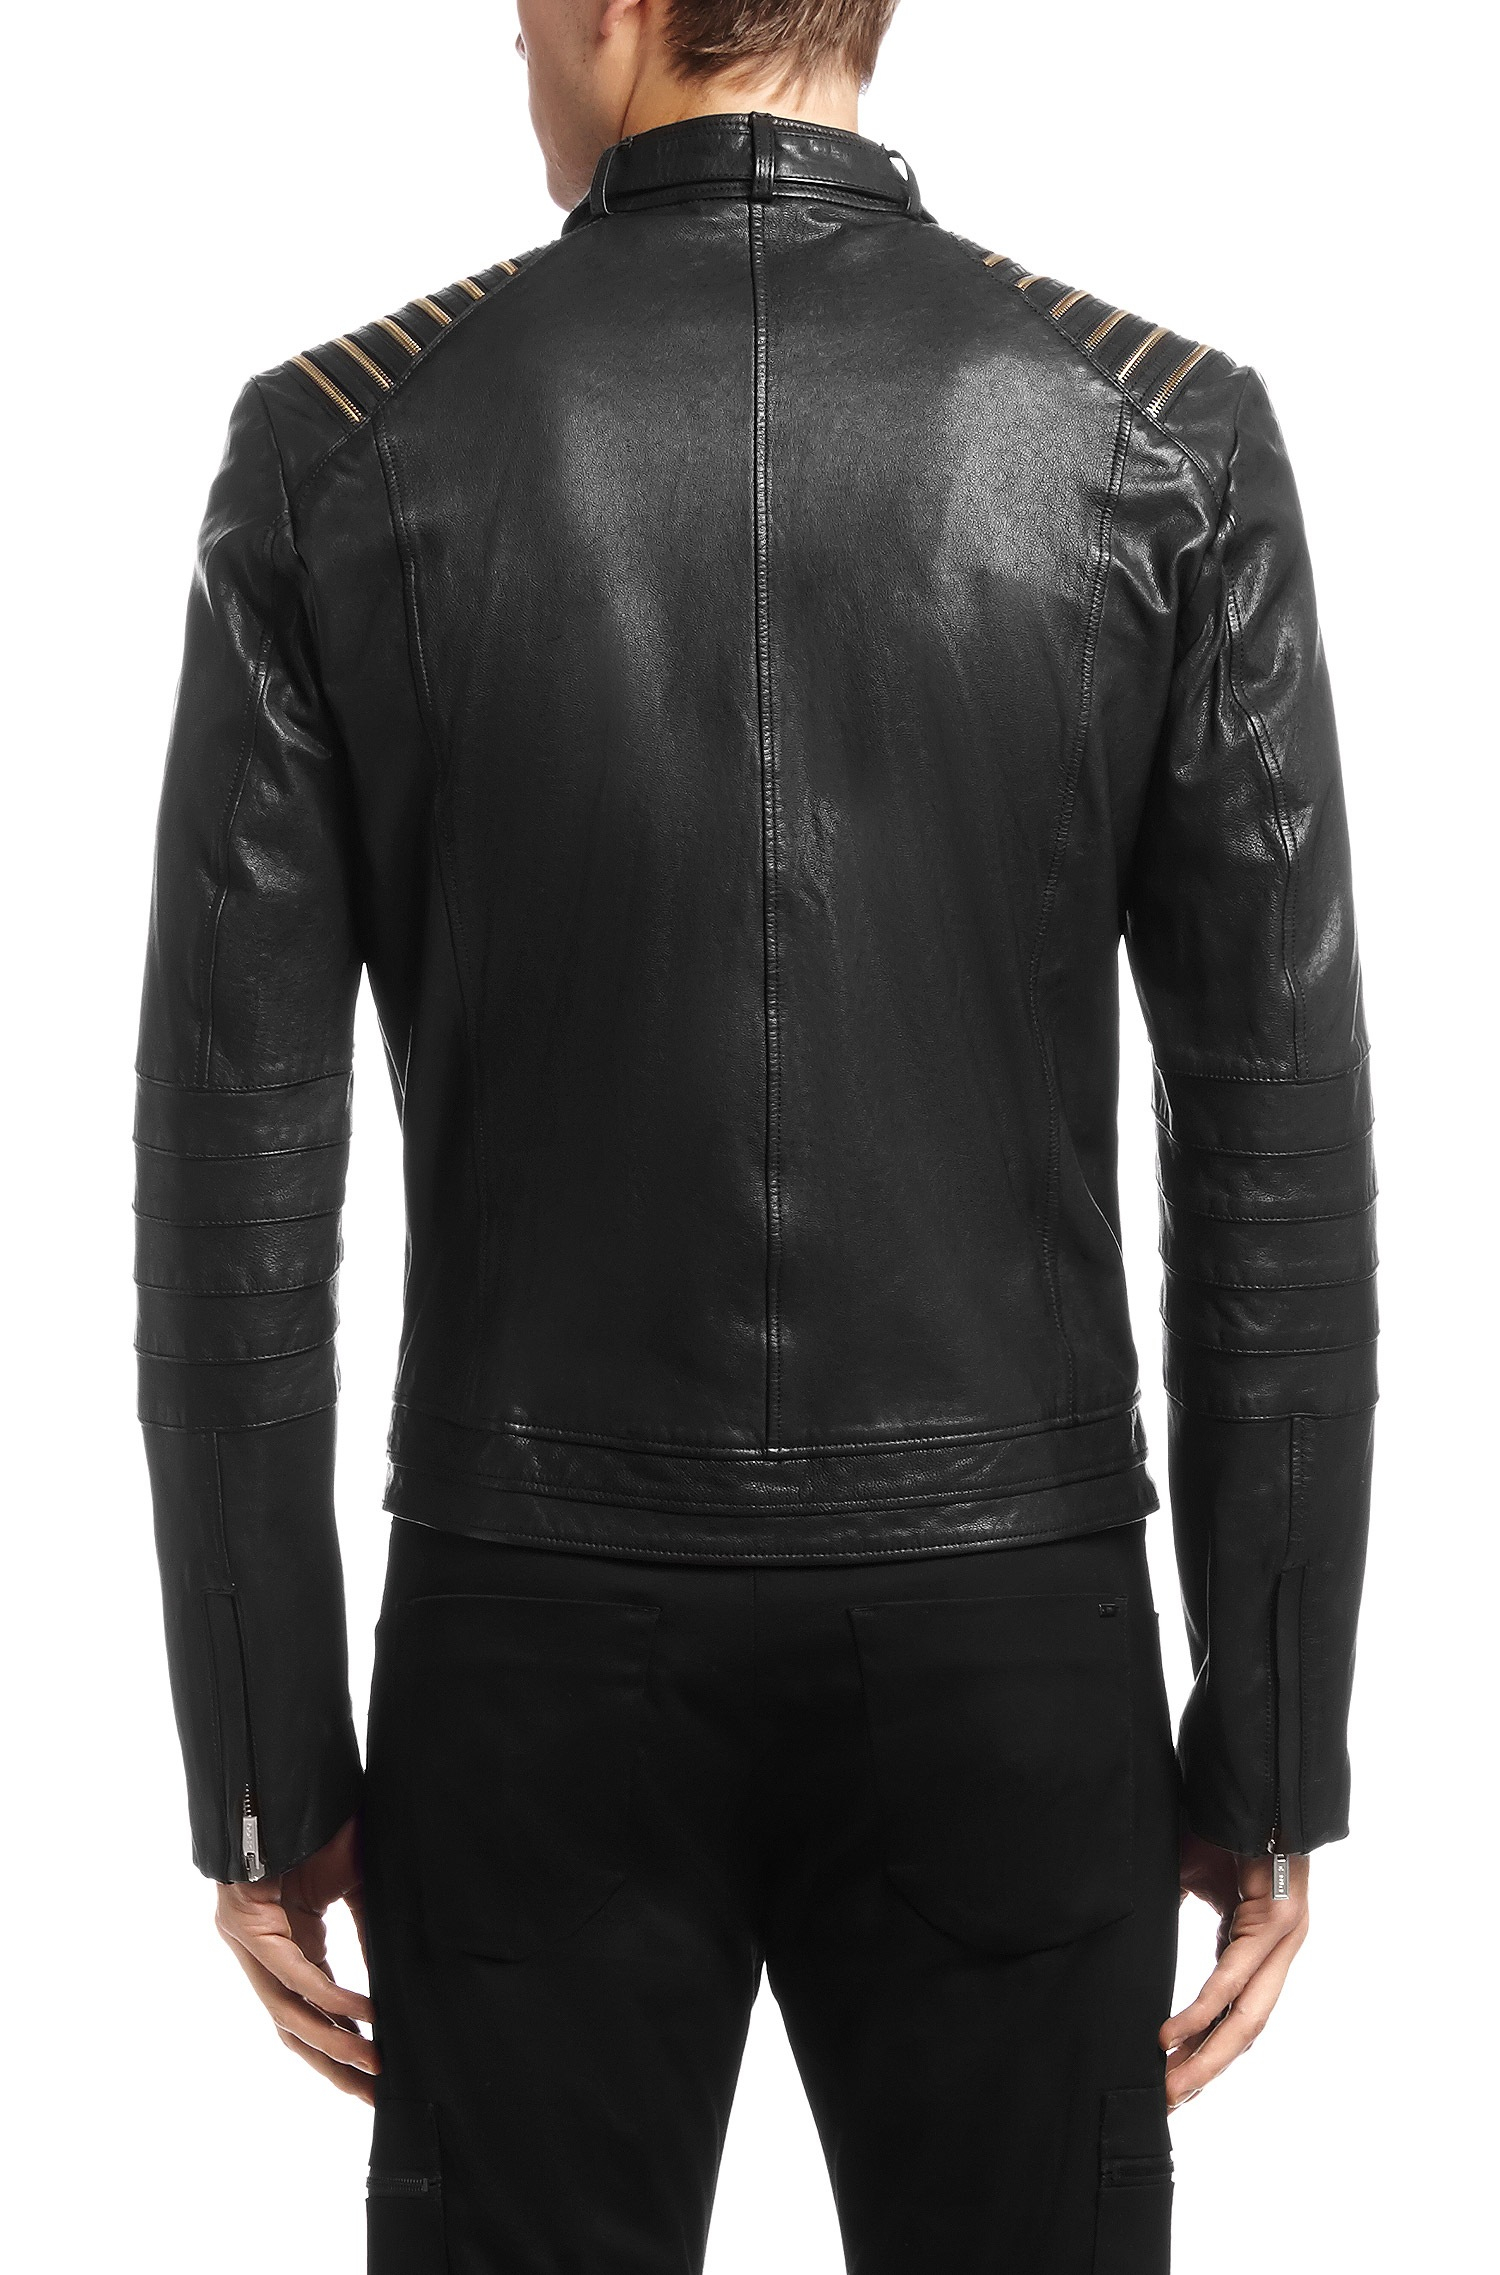 HUGO Leather Jacket 'Ledrick' In Biker Style in Black for Men - Lyst